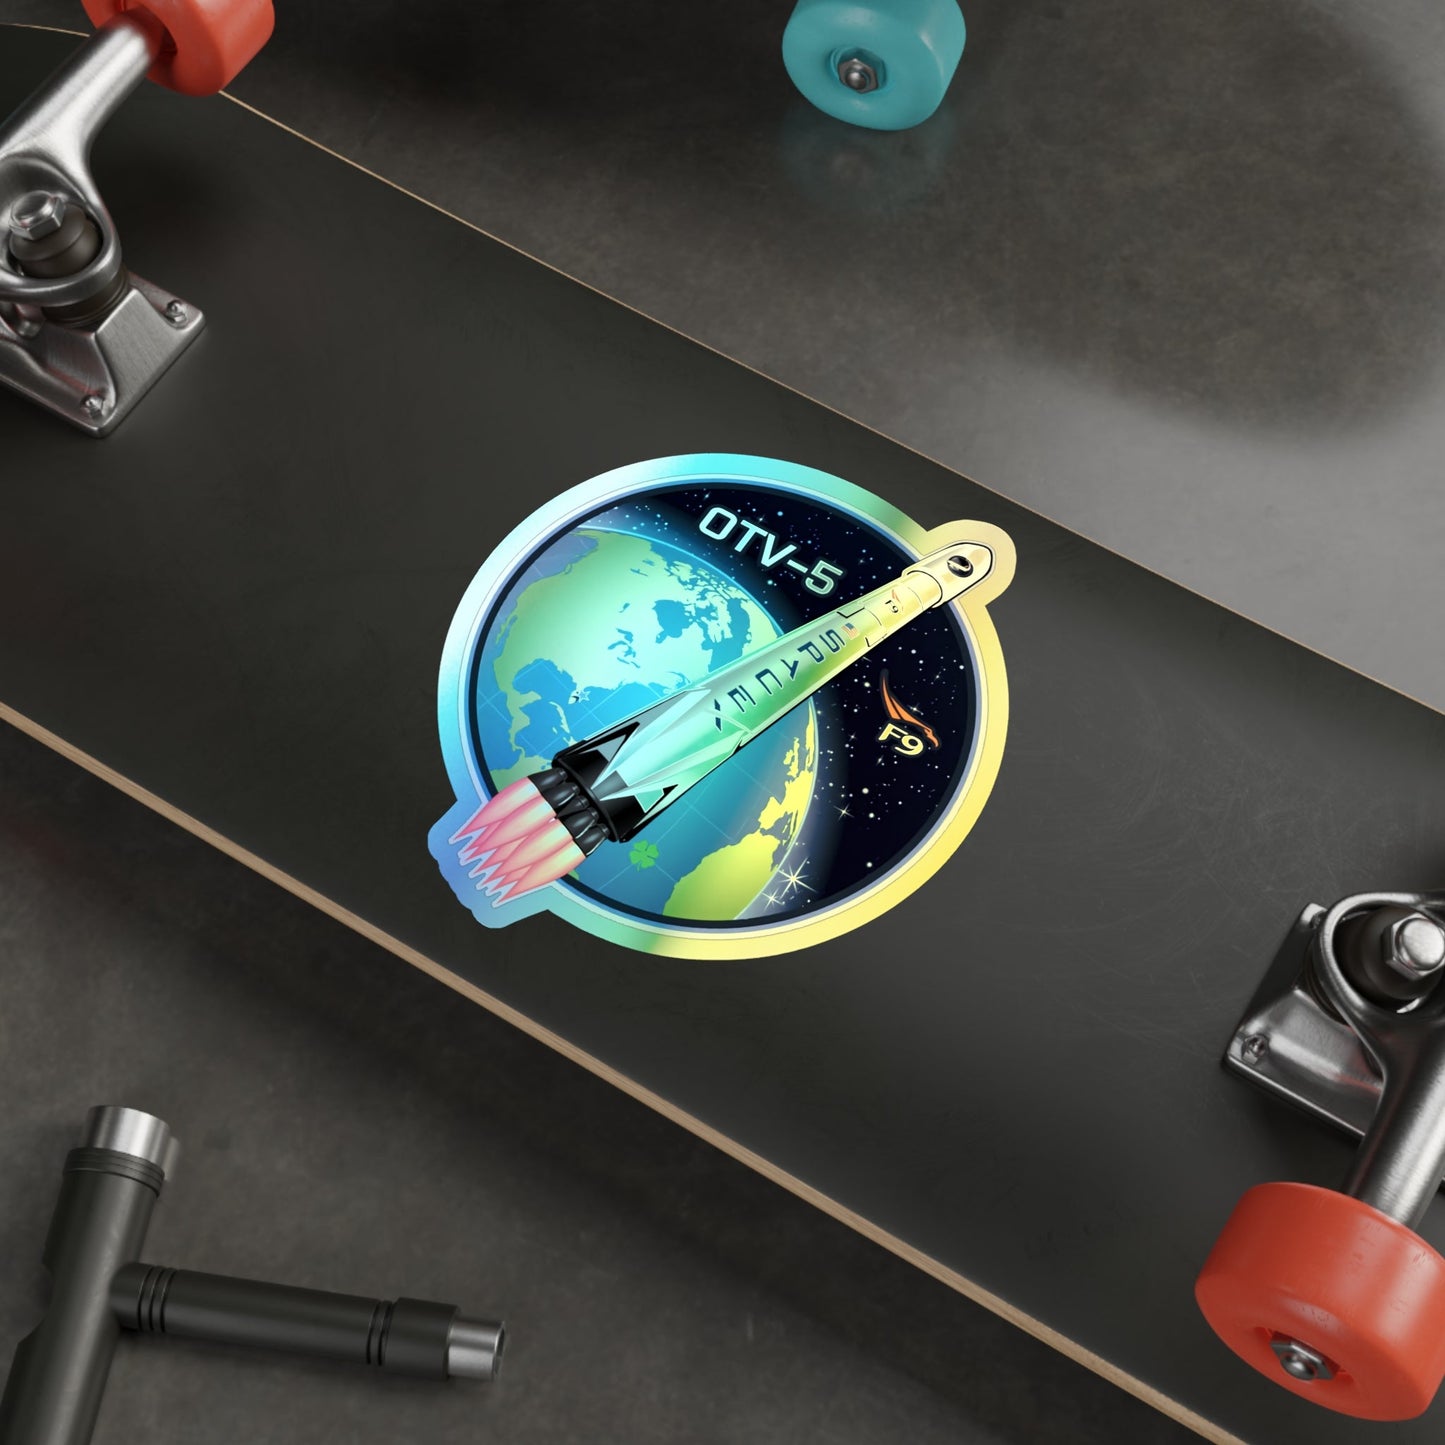 OTV-5 (SpaceX) Holographic STICKER Die-Cut Vinyl Decal-The Sticker Space